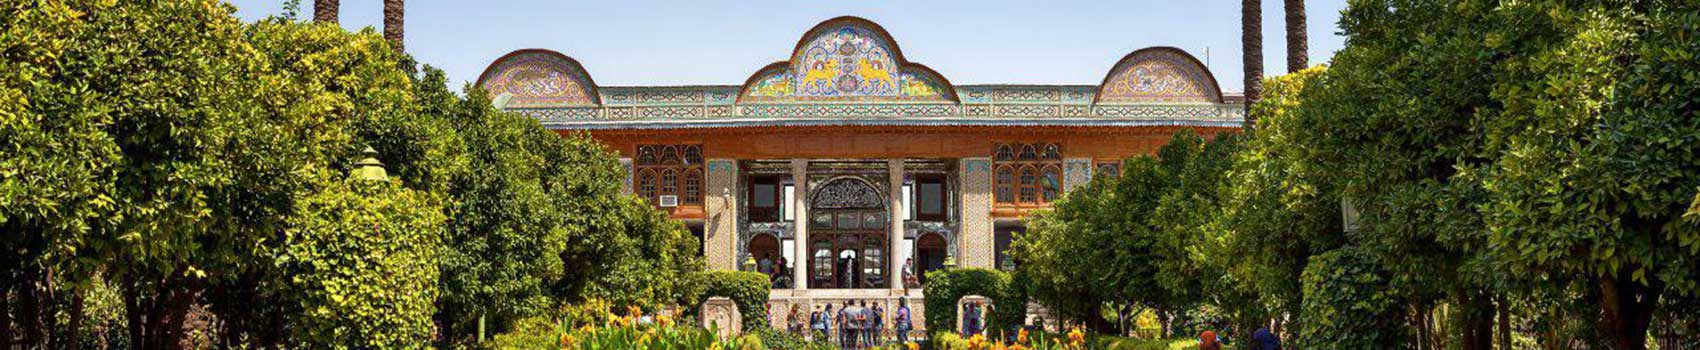 Narenjestan Garden or Qavam House in Shiraz